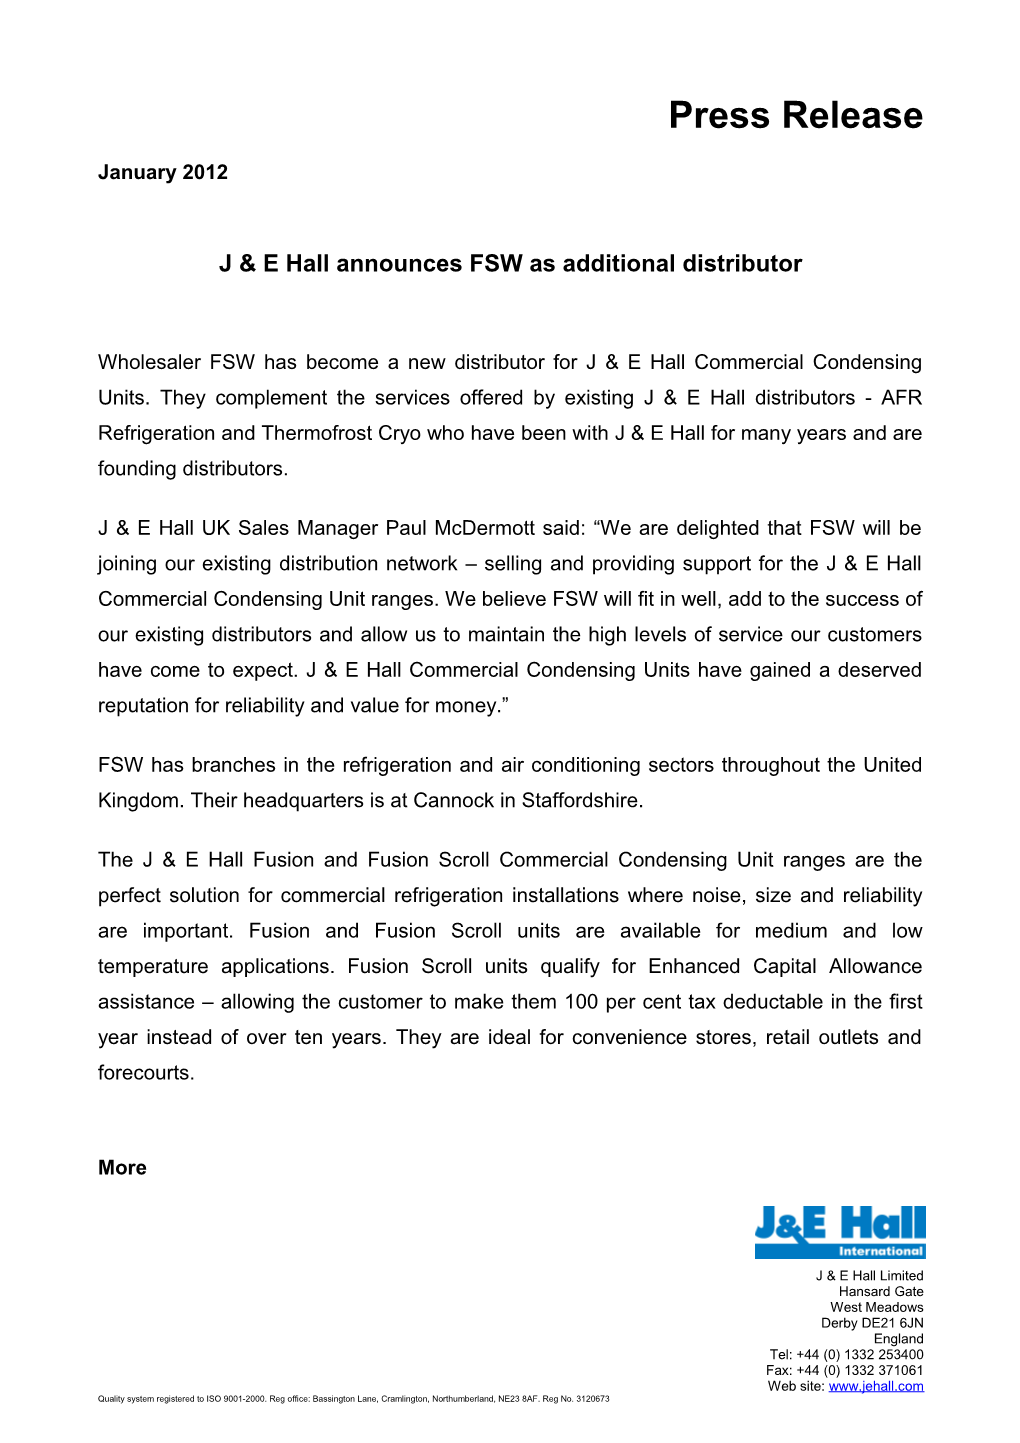 J & E Hall Announces FSW As Additional Distributor